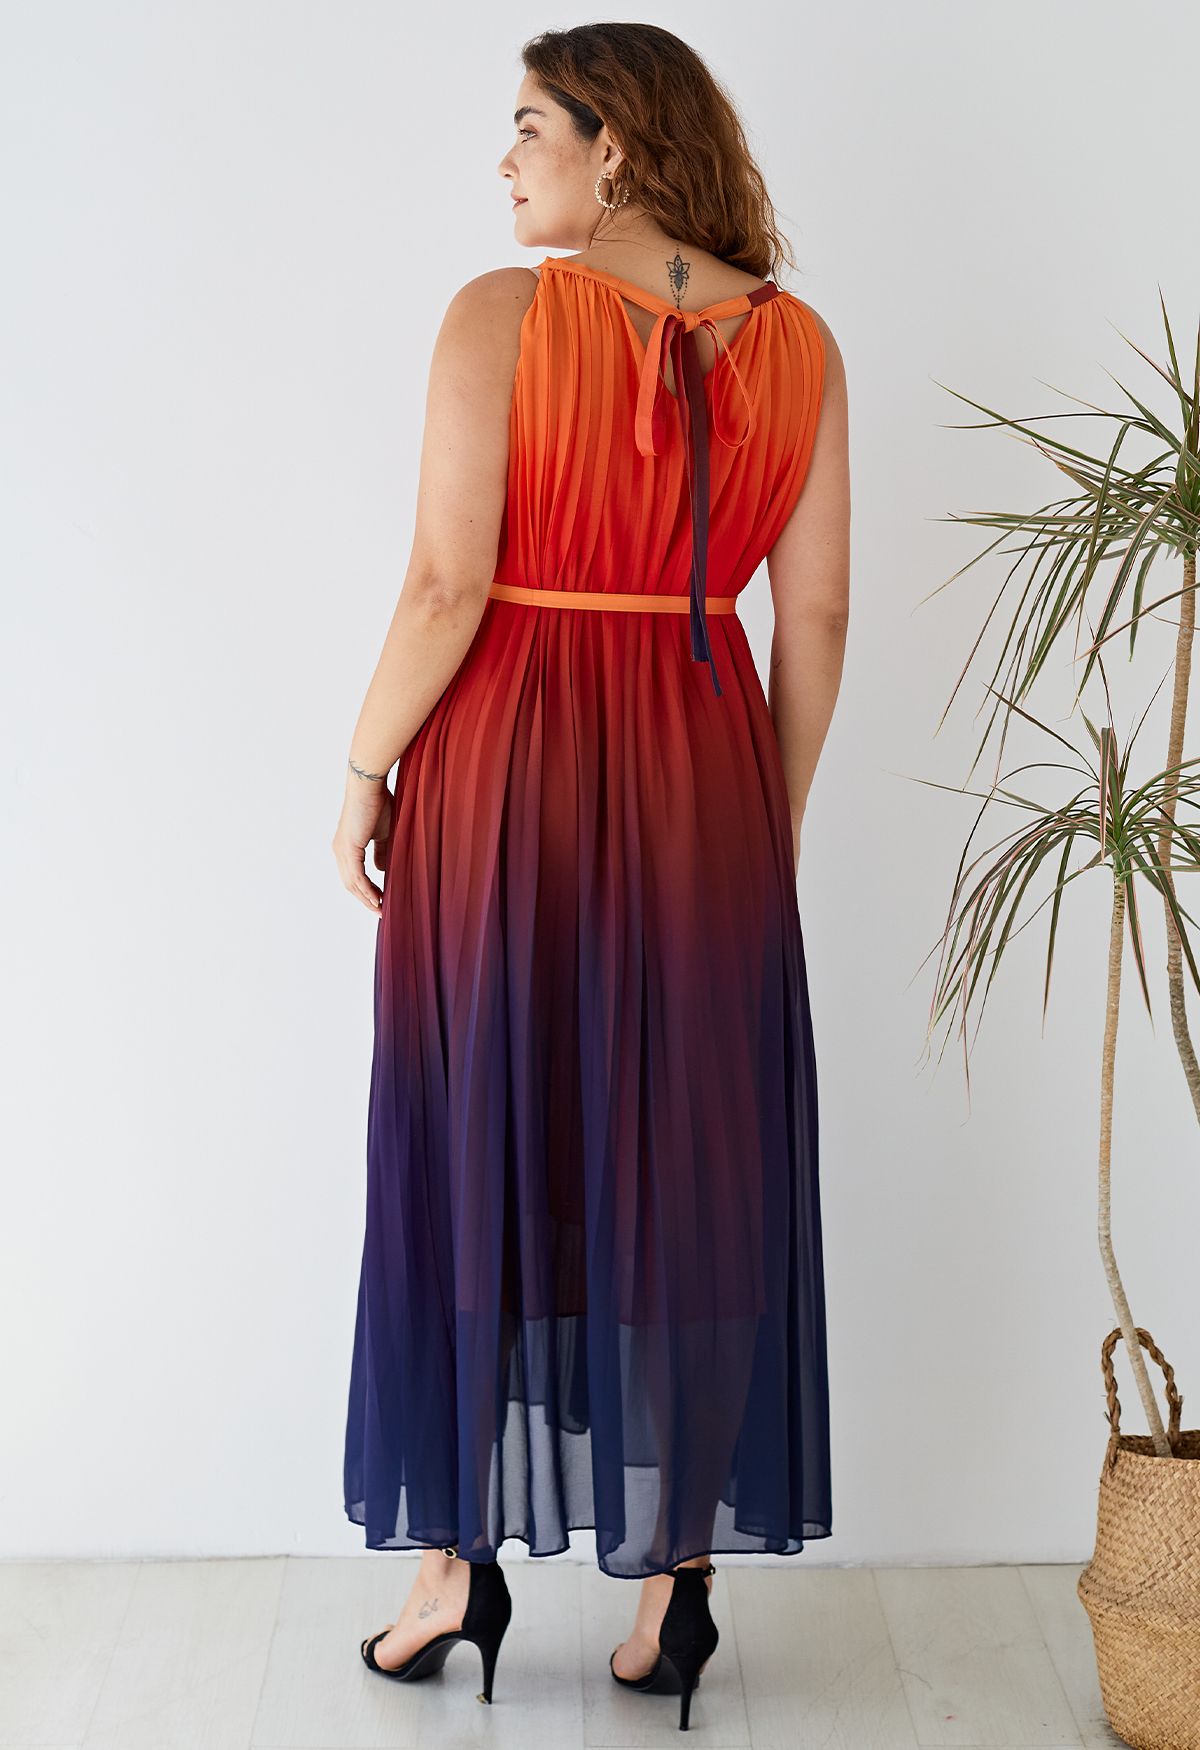 Splendor of the Sunset Gradient Pleated Maxi Dress